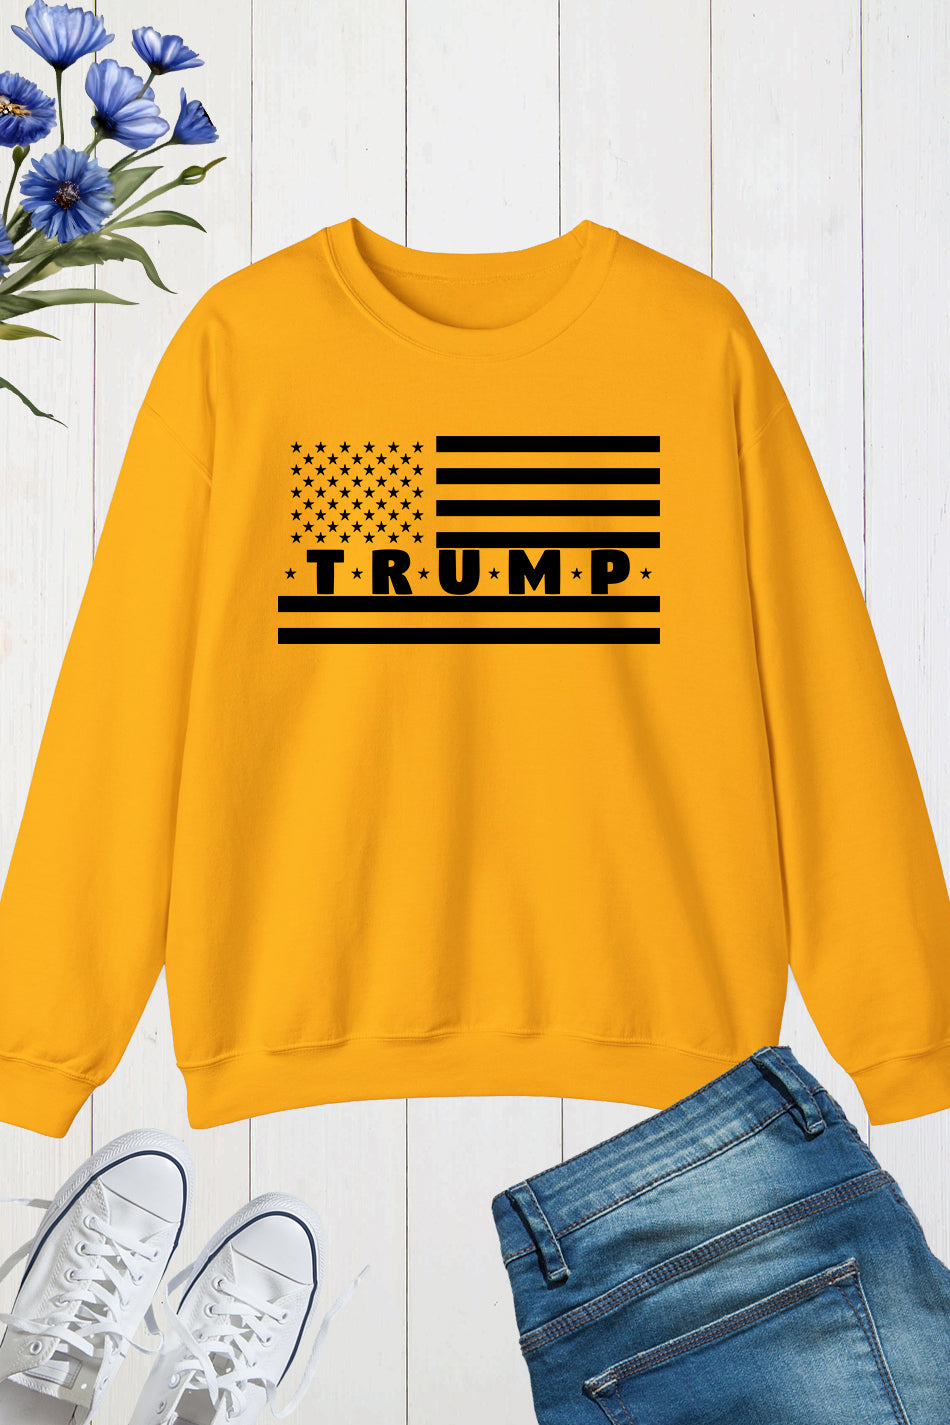 Trump Flag Republican MAGA Political Sweatshirts